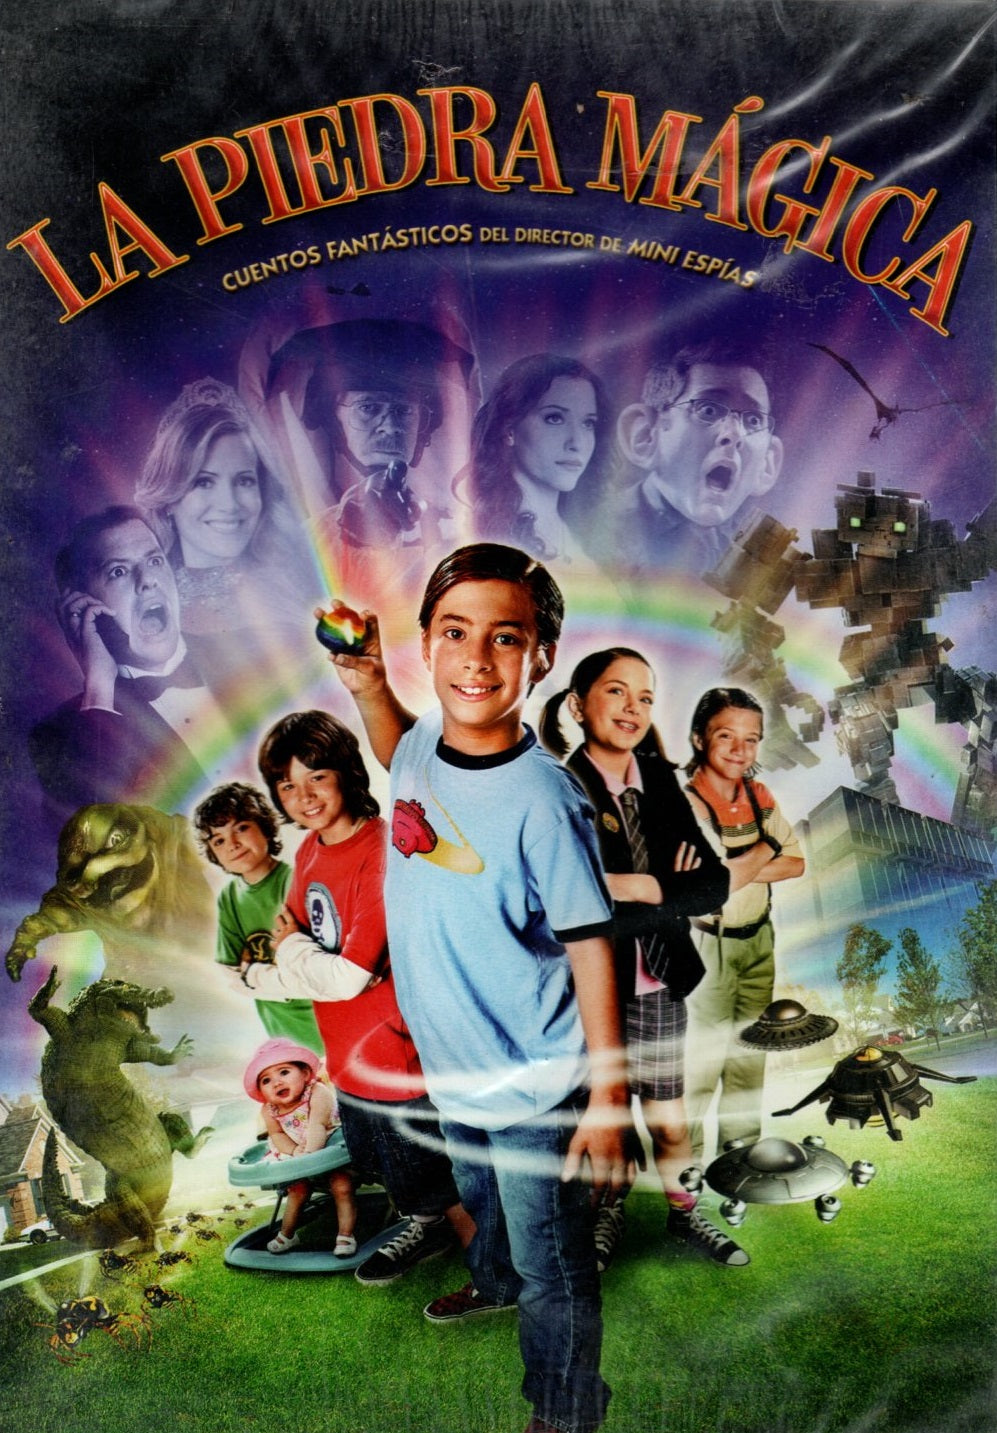 DVD LA PIEDRA MAGICA